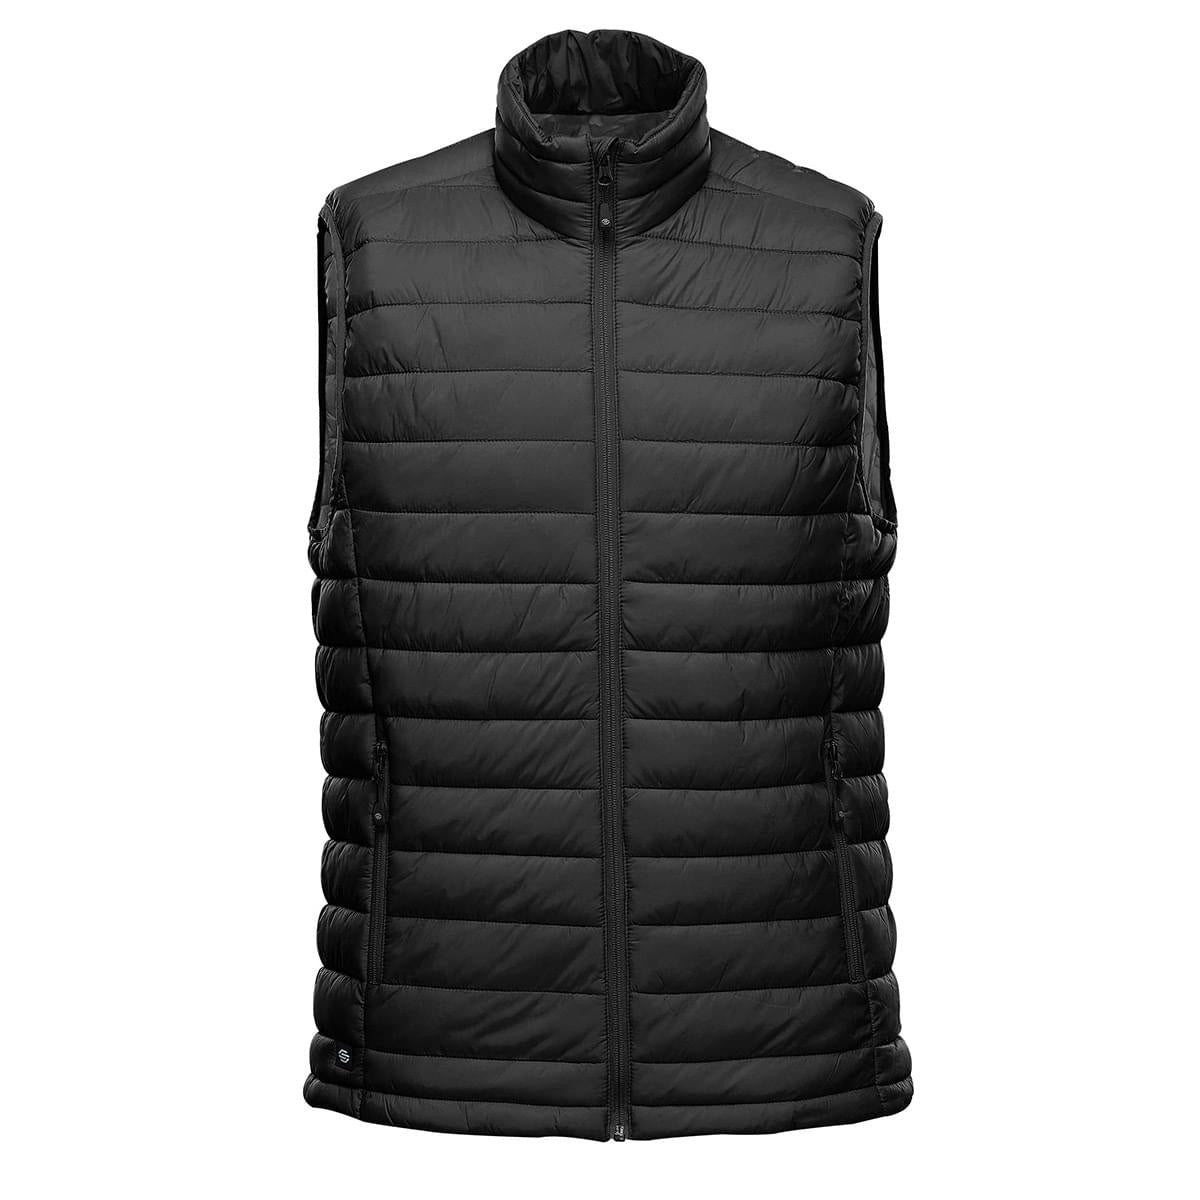 Men's Black Ice Thermal Jacket - X-1